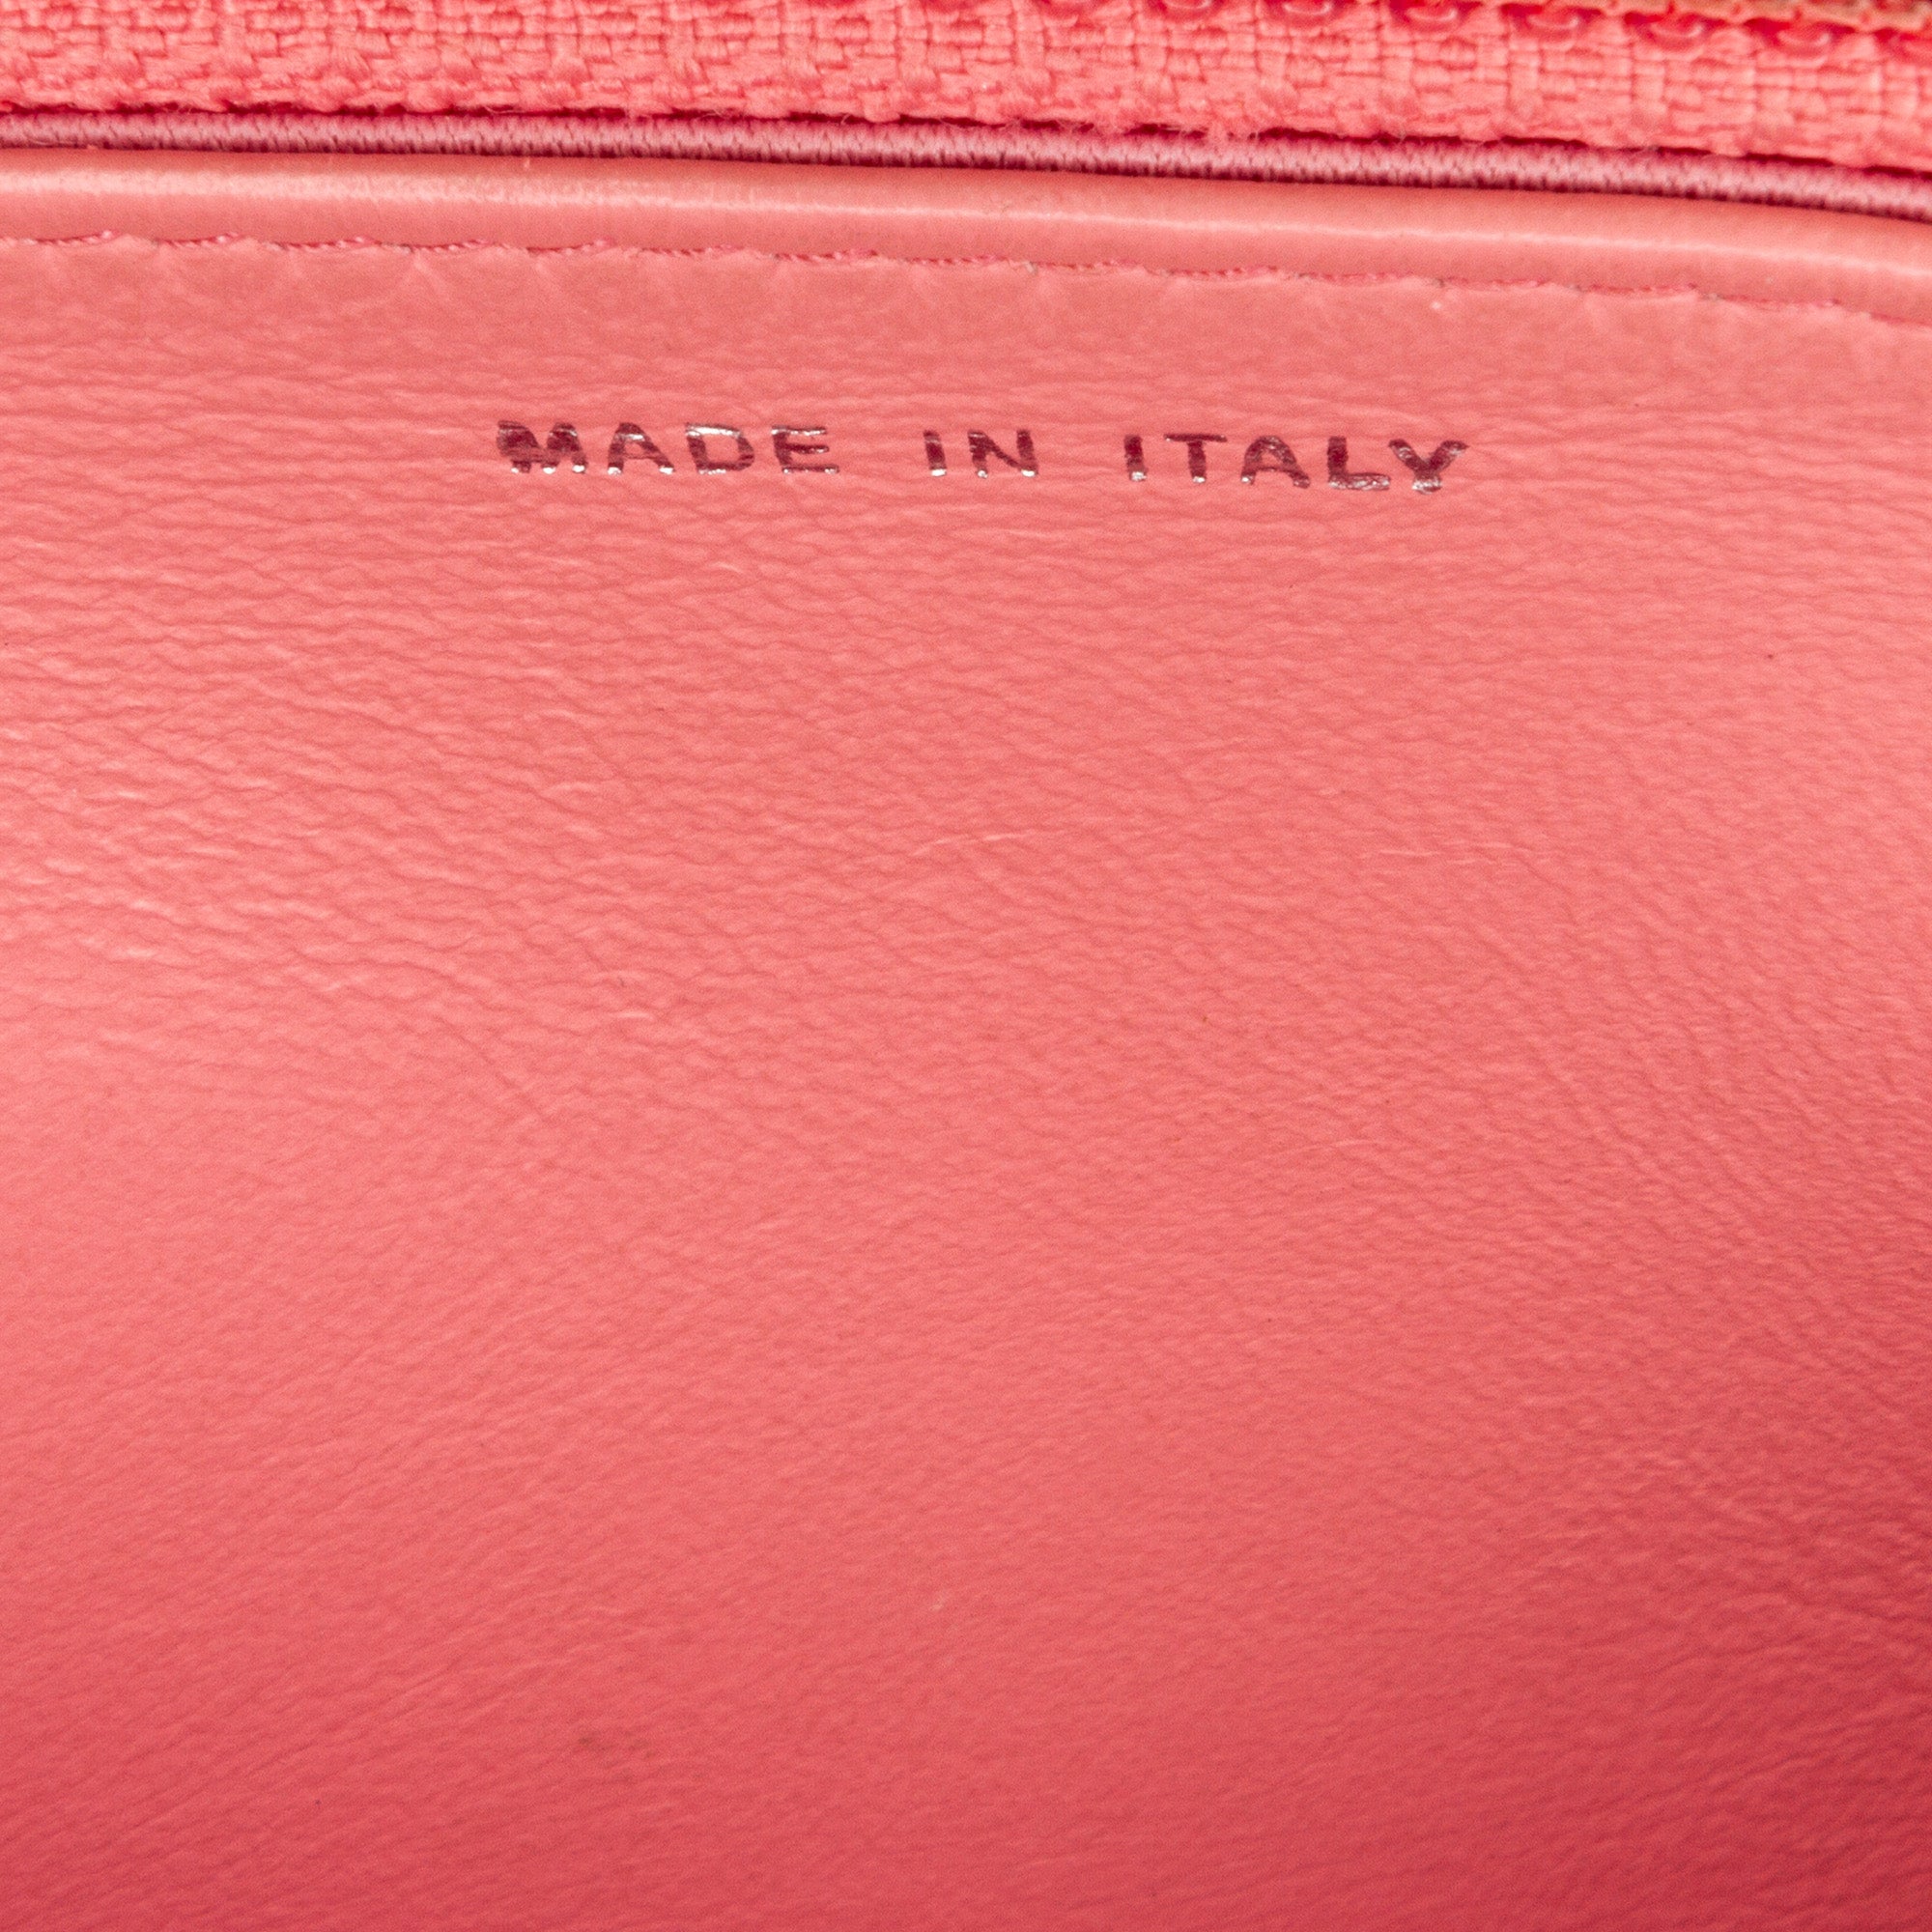 Pink Chanel Camellia Wallet On Chain Crossbody Bag – Designer Revival